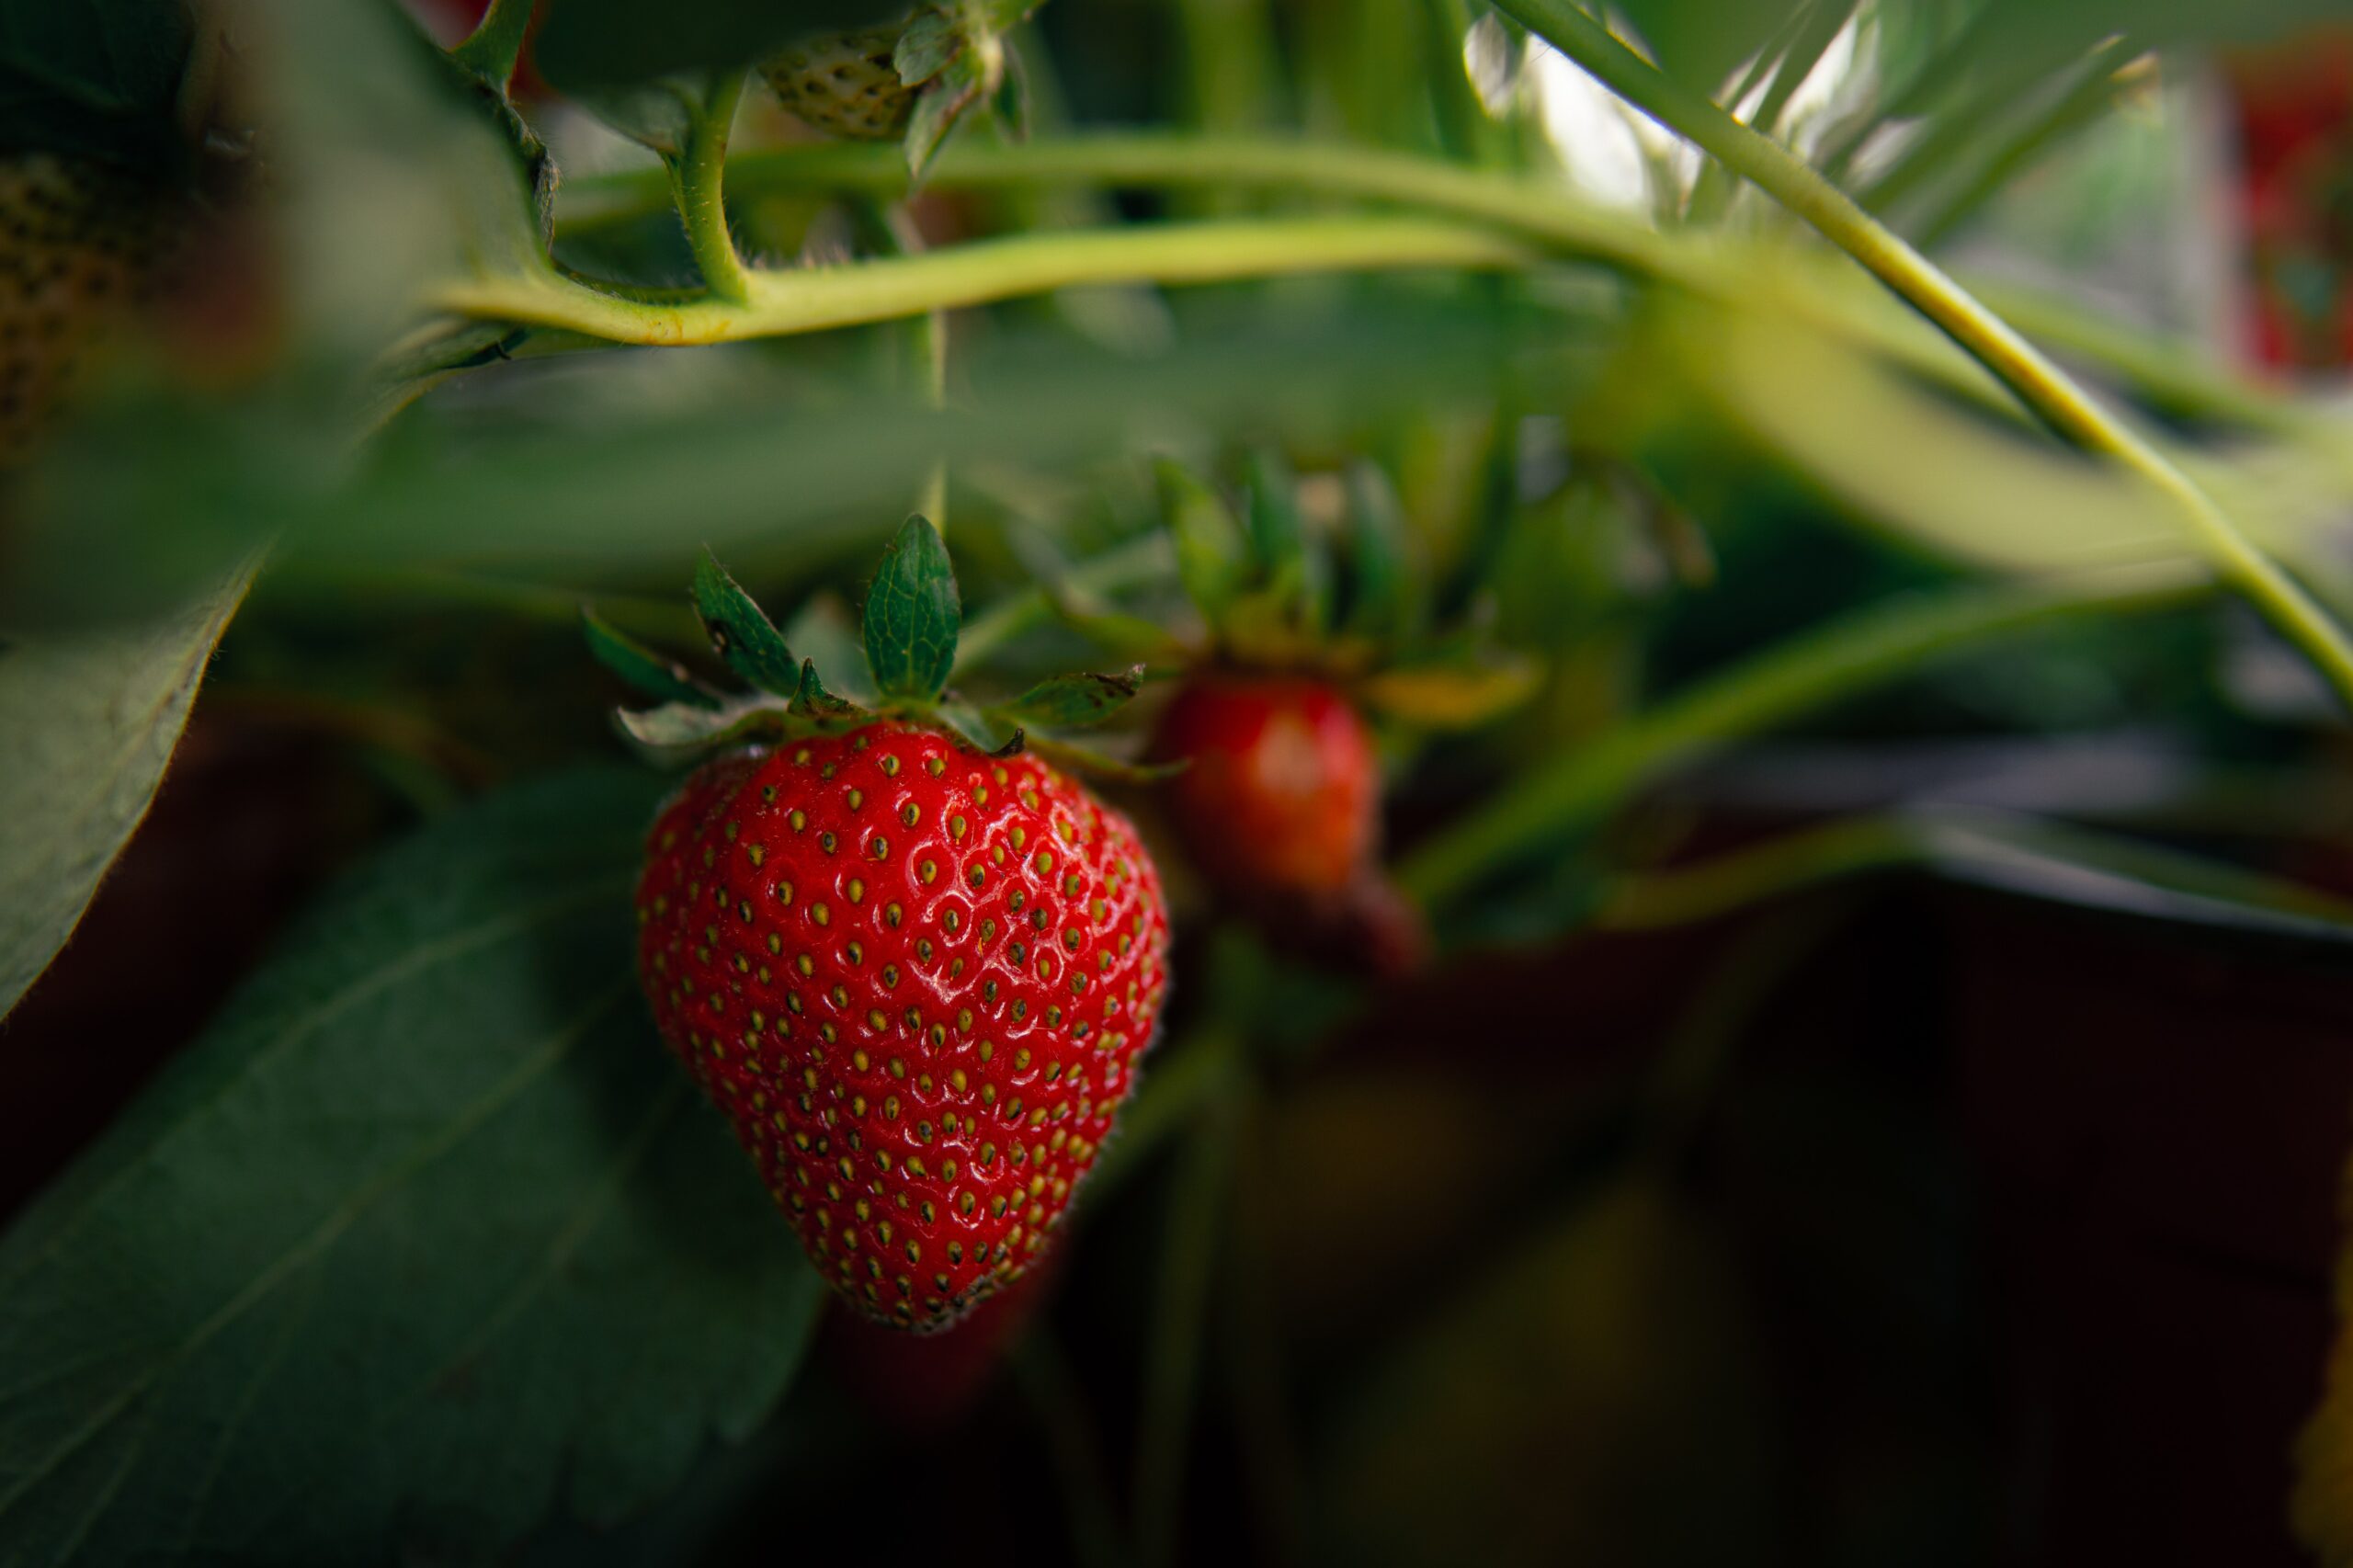 Growing Antioxidant-Rich Plants